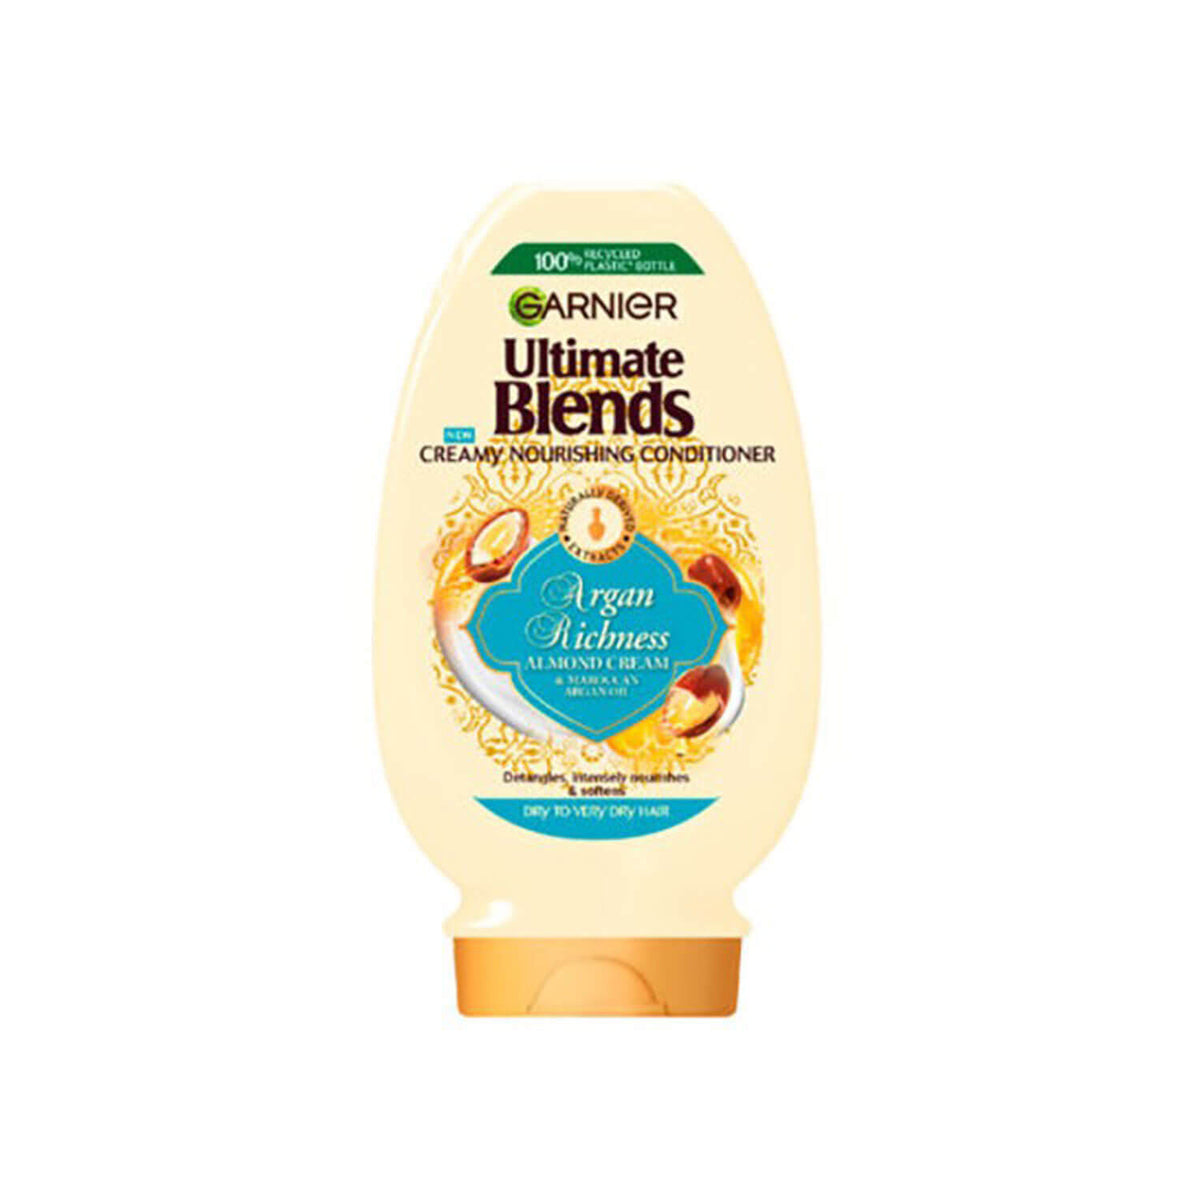 Ultimate Blends Argan Oil & Almond Cream Conditioner 400ml